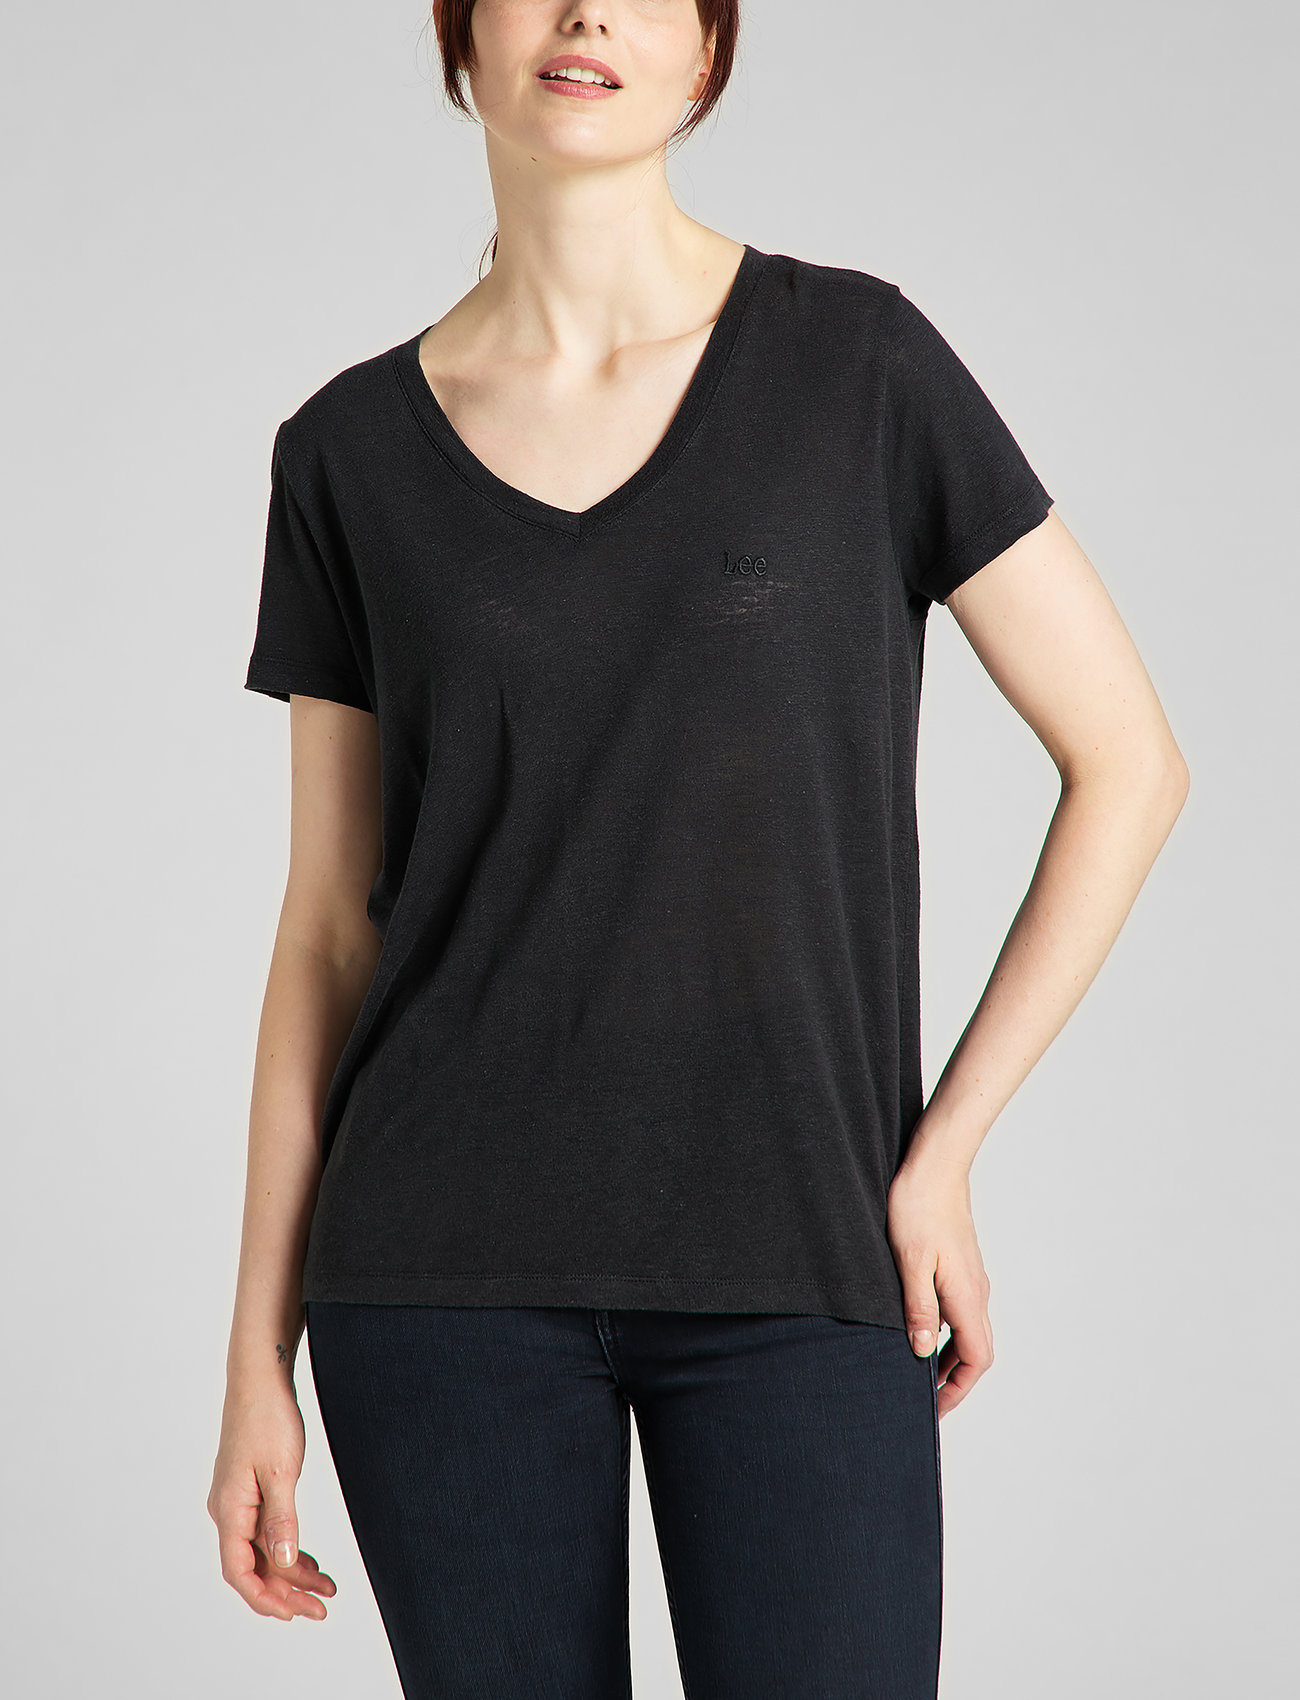 Lee Jeans - V NECK TEE - t-shirts & tops - black - 0